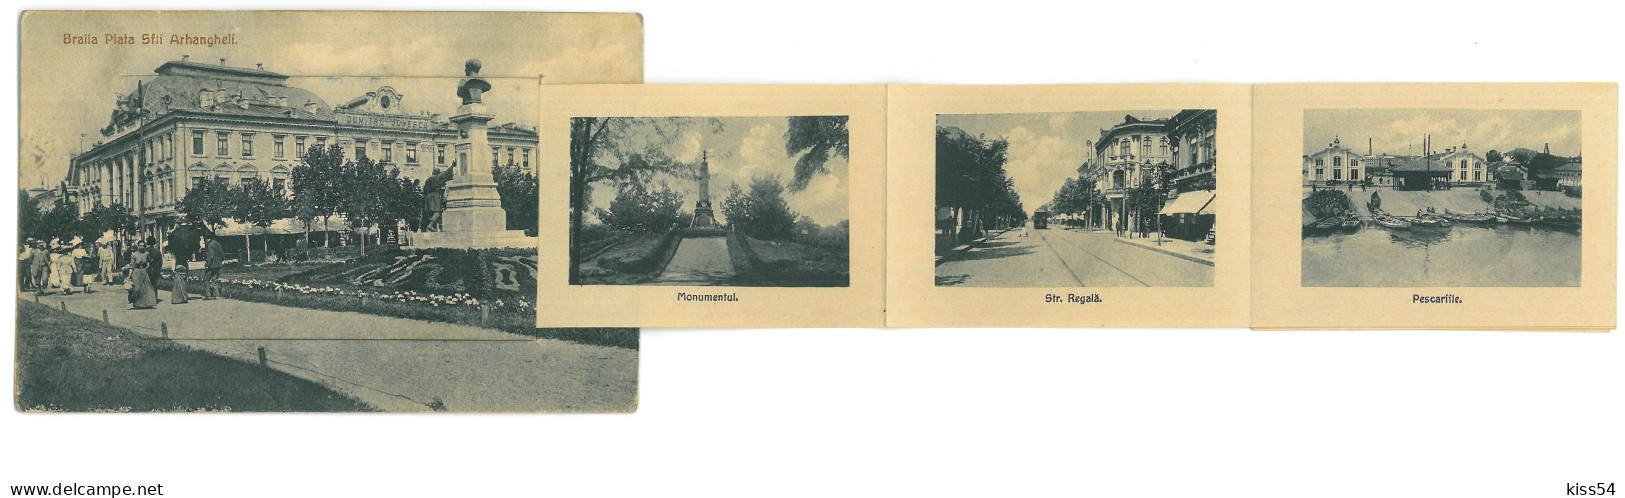 RO 83 - 22758 BRAILA, Leporello, Park, Traian Statue, Romania - Old Postcard +10 Mini Photocards - Used - 1913 - Roemenië